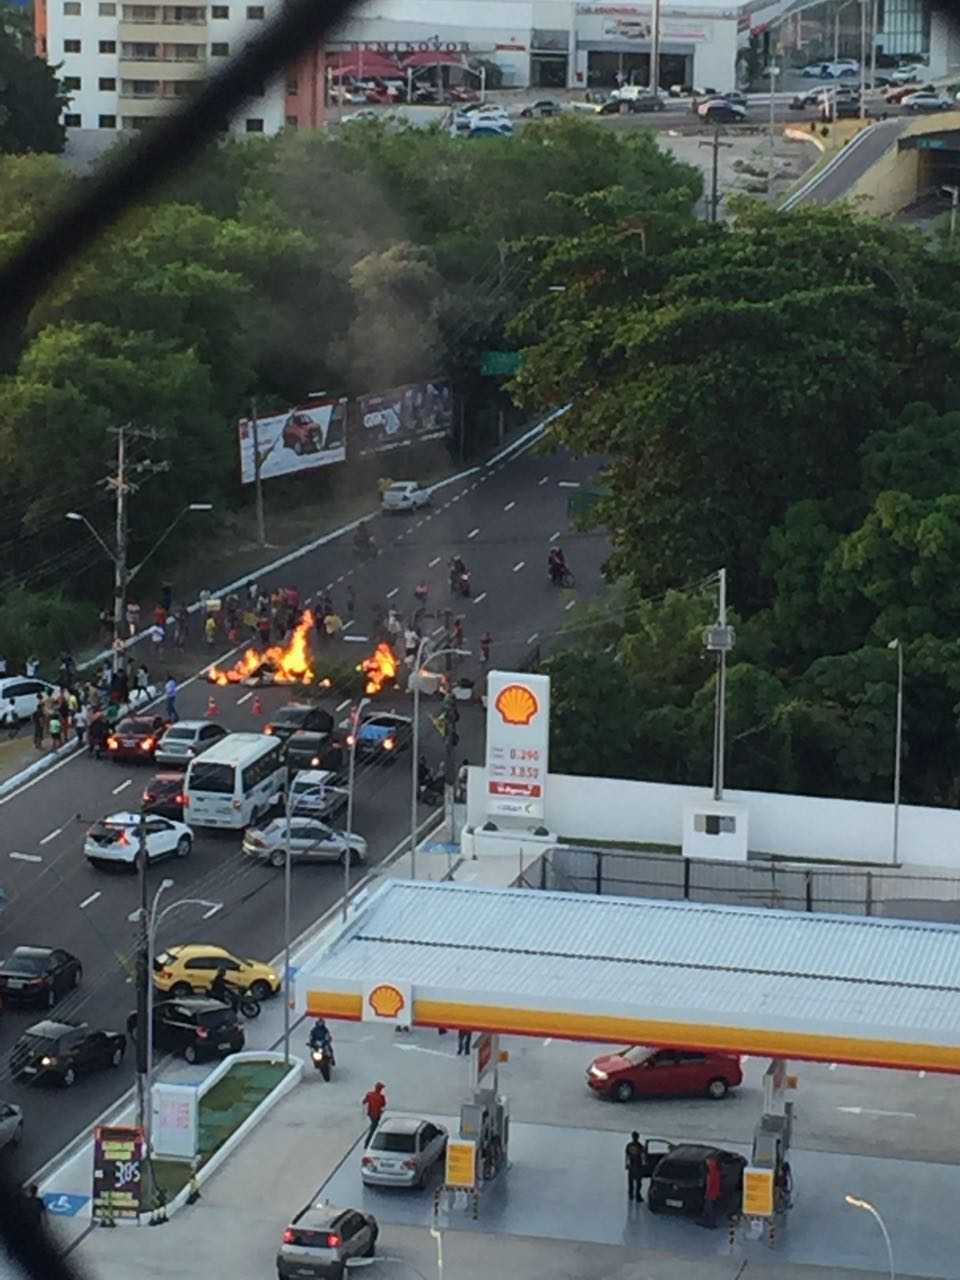 Manifestação interdita na Av Jornalista Umberto Calderaro Filho (Av Paraiba) em Manaus